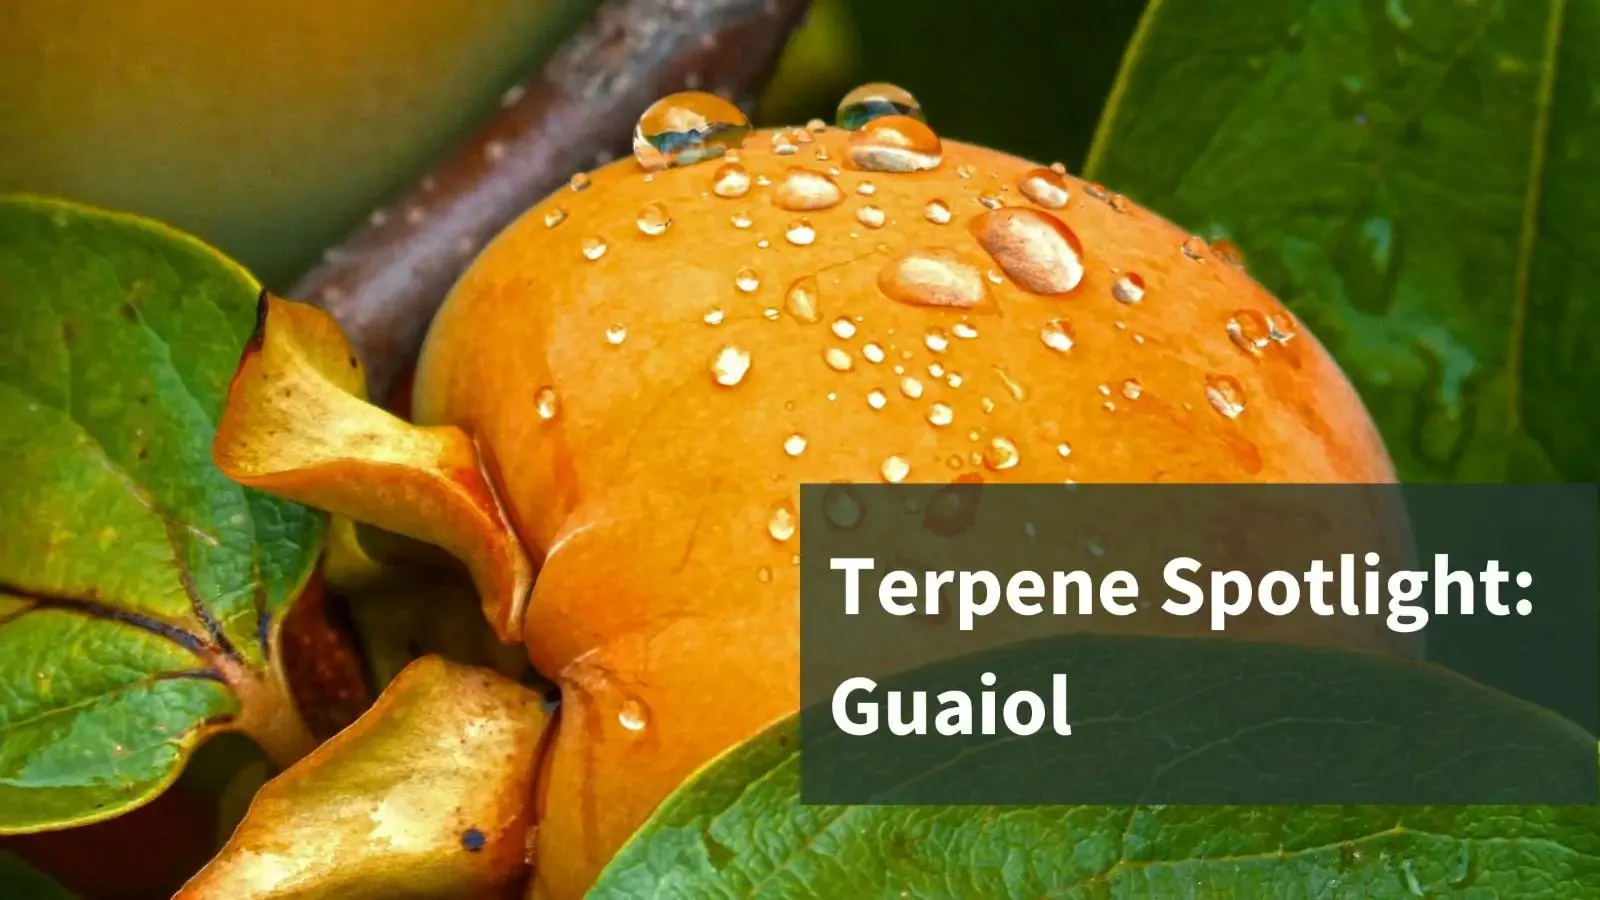 Lignum Vitae fruit with the text "Terpene Spotlight: Guaiol"